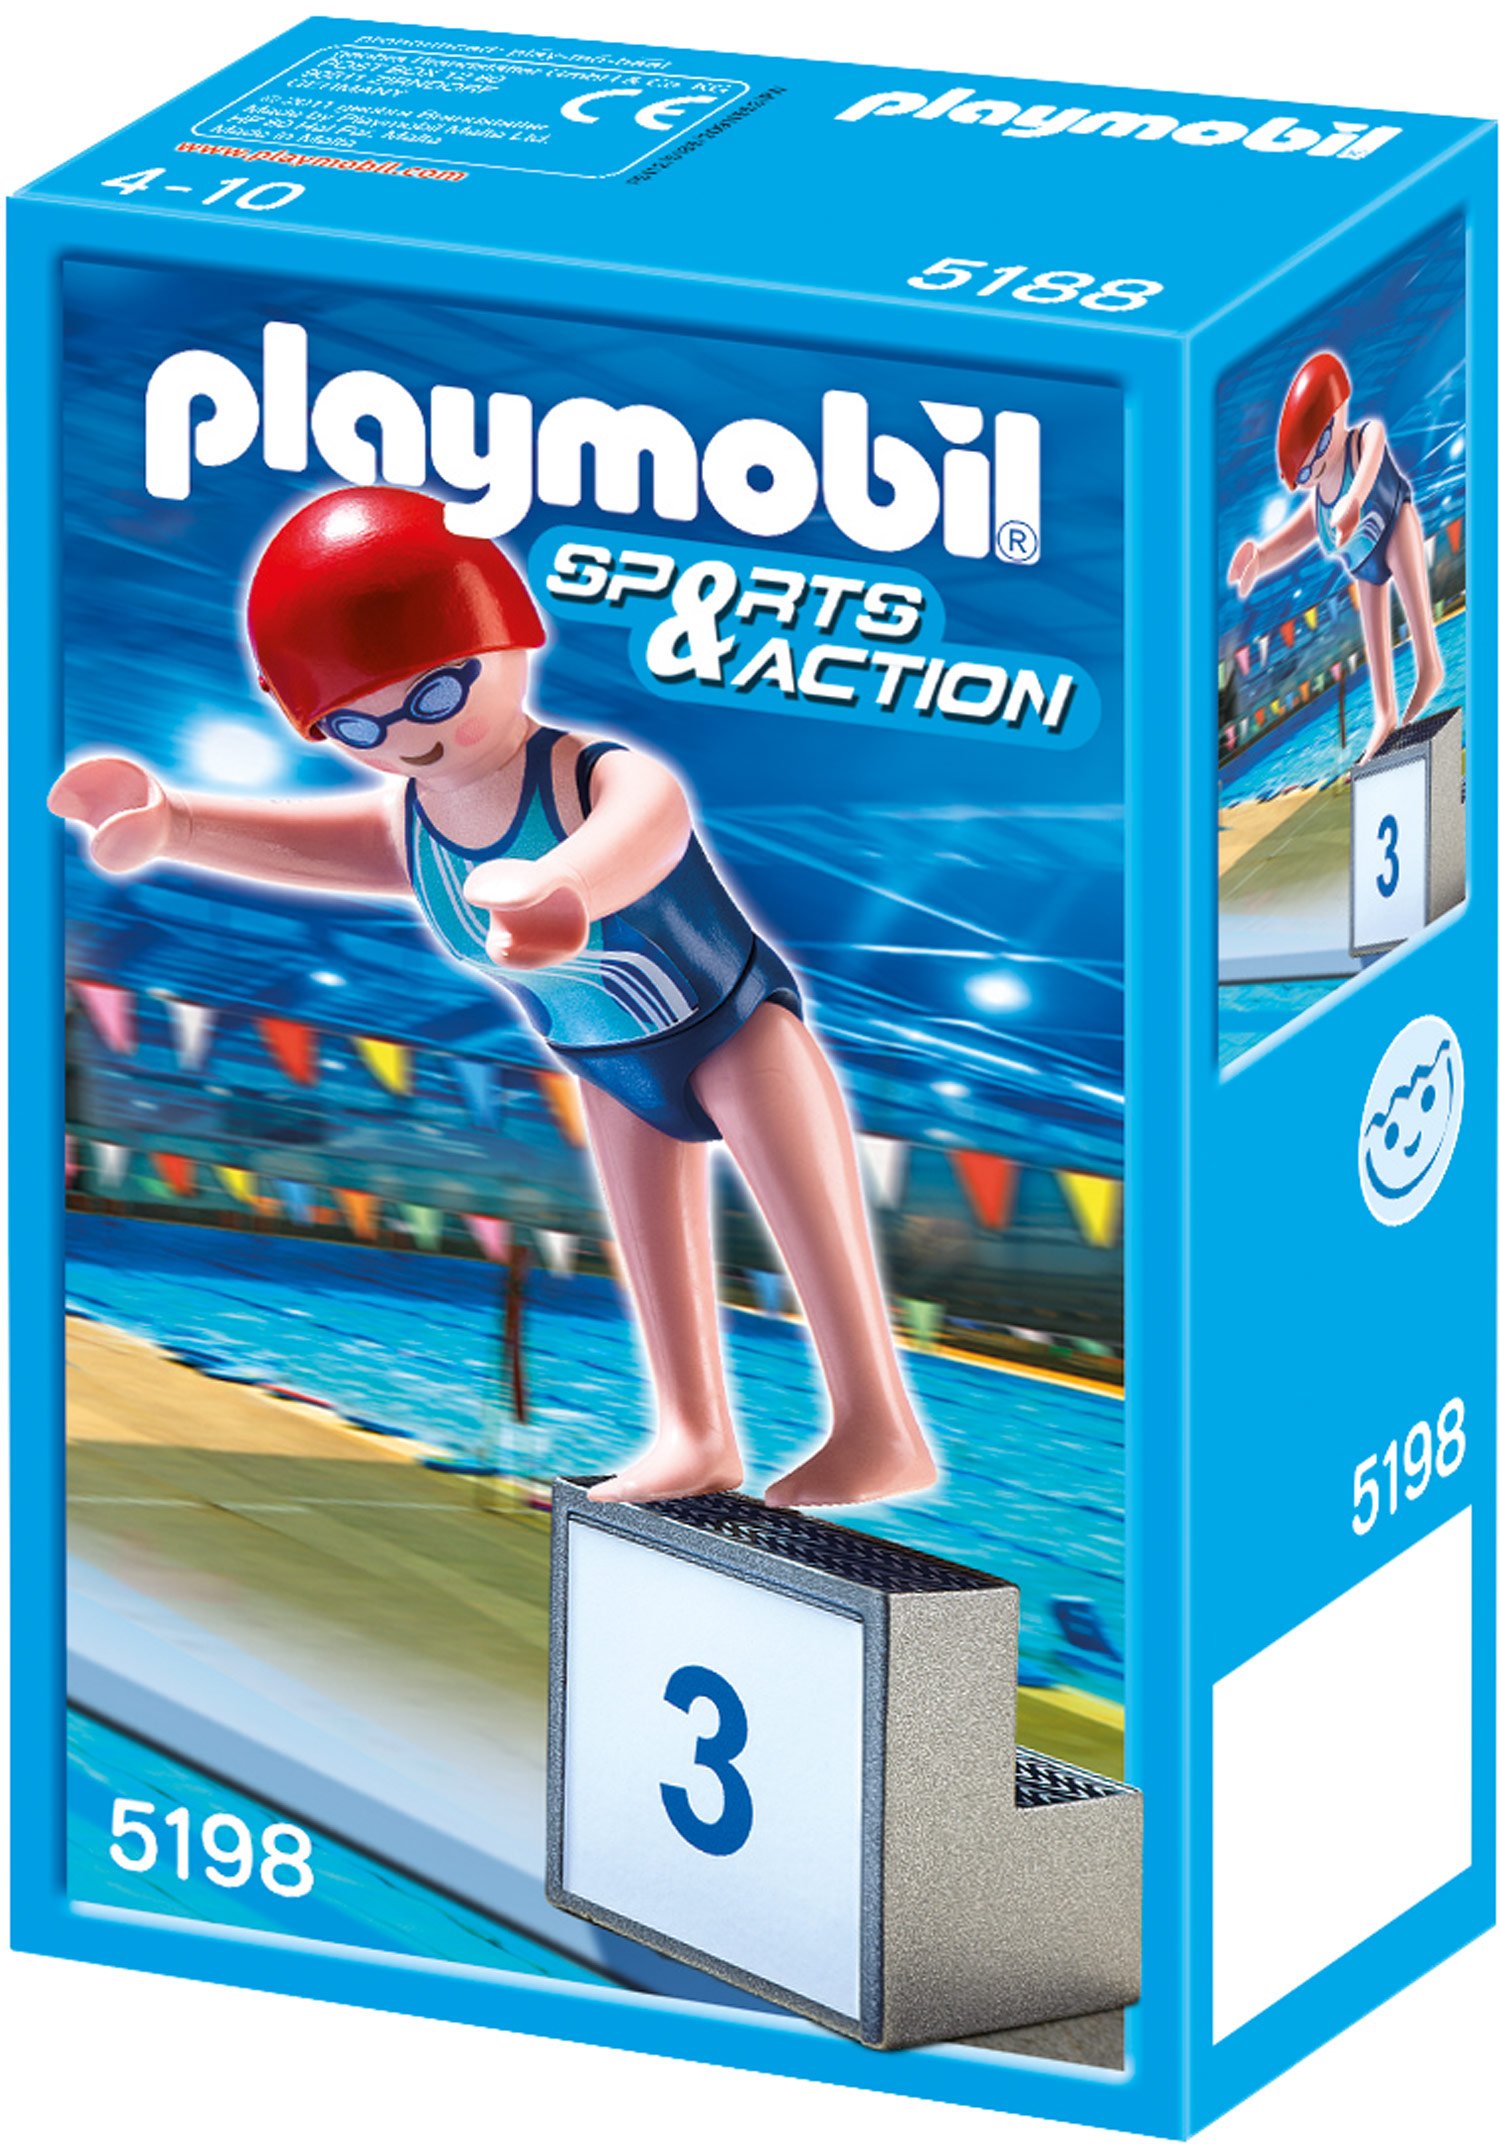 Playmobil Swimmer